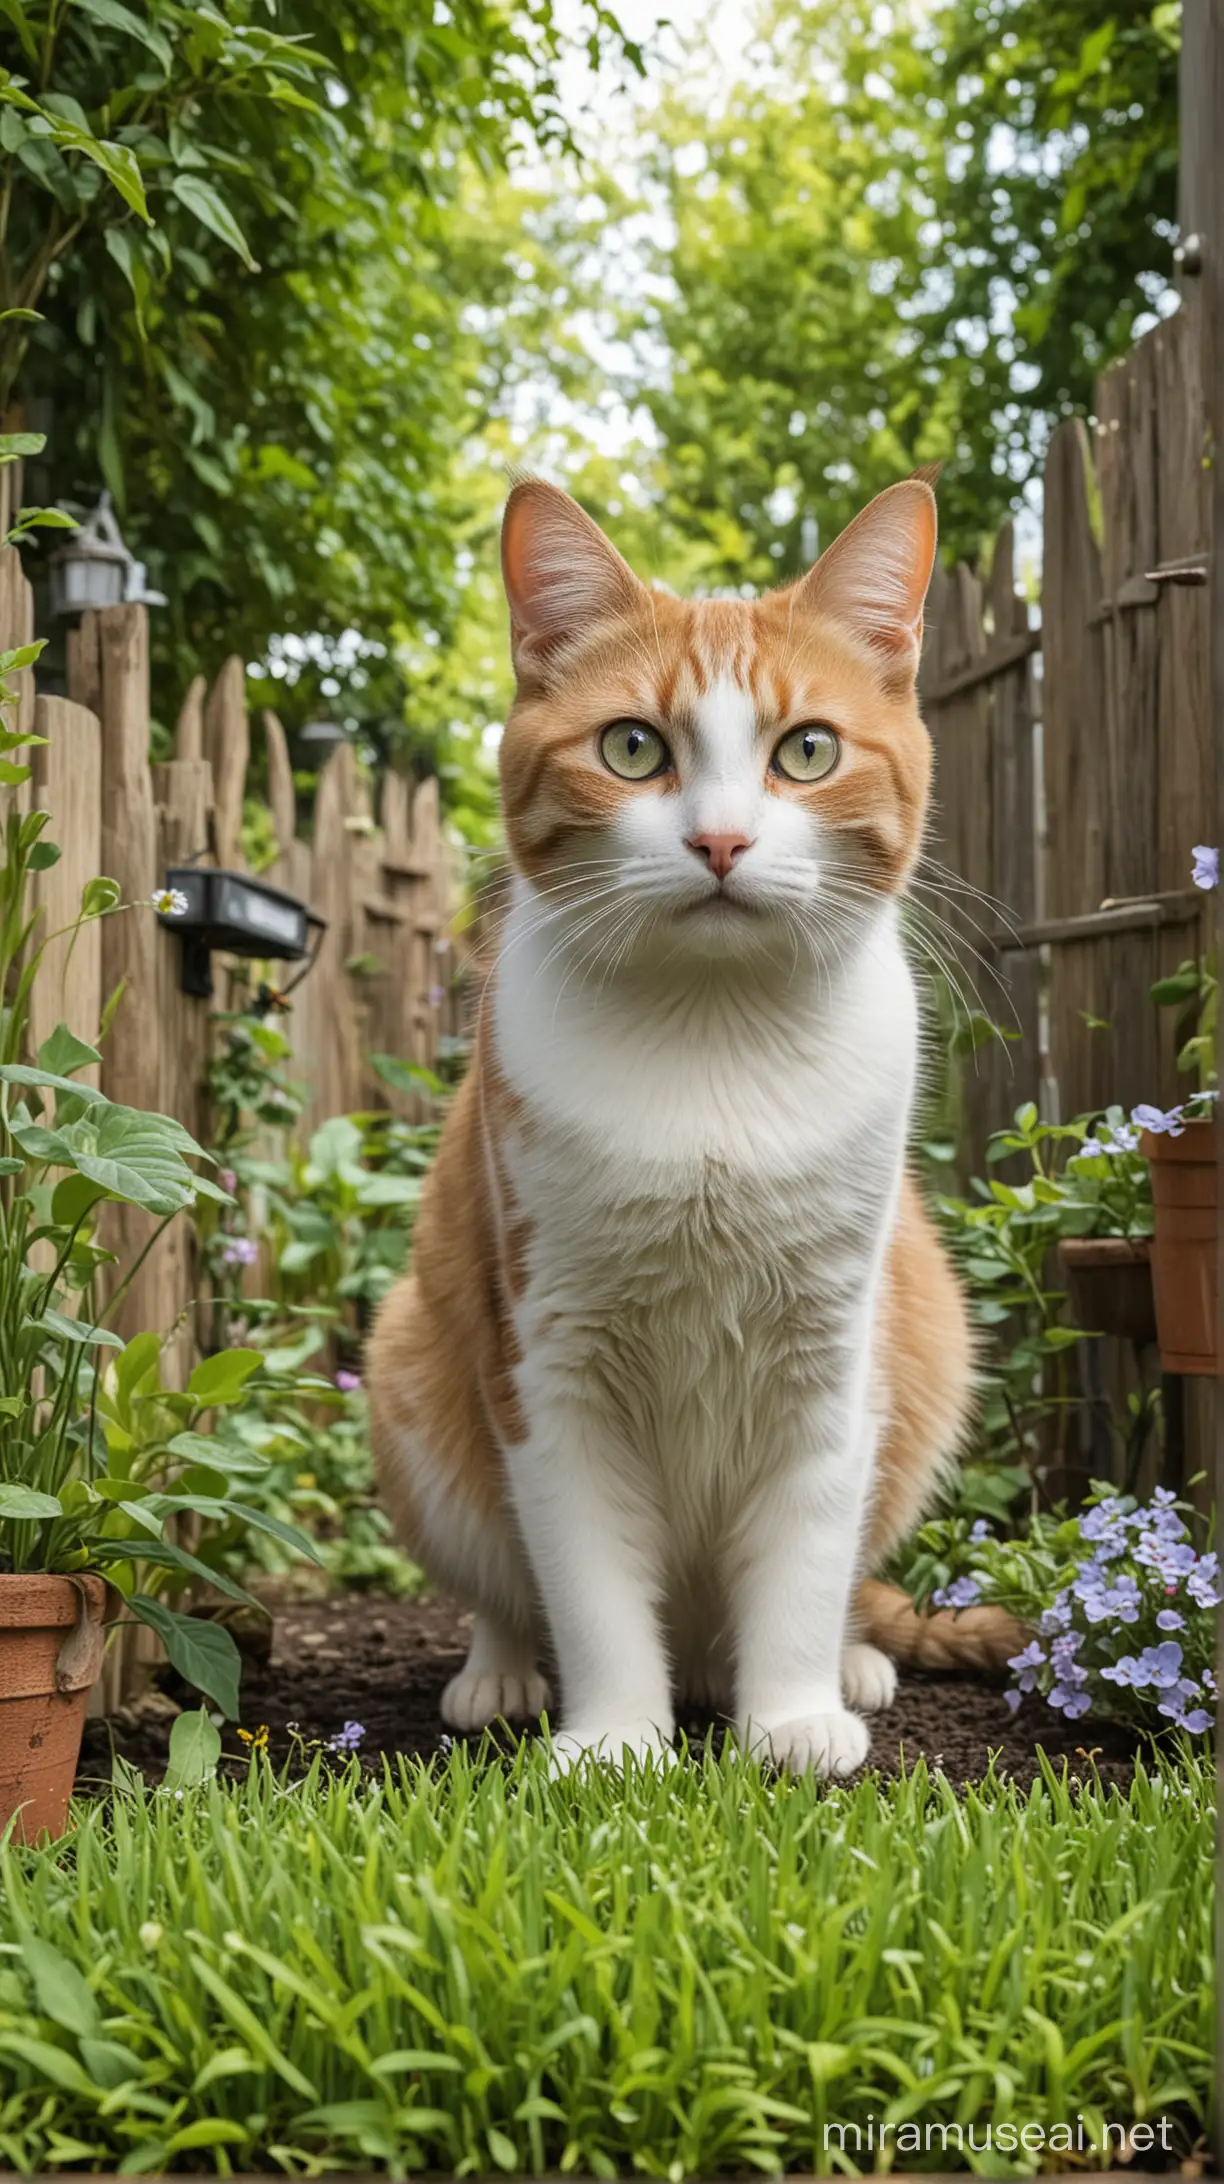 Enchanting Cat City A Serene Garden Dwelling